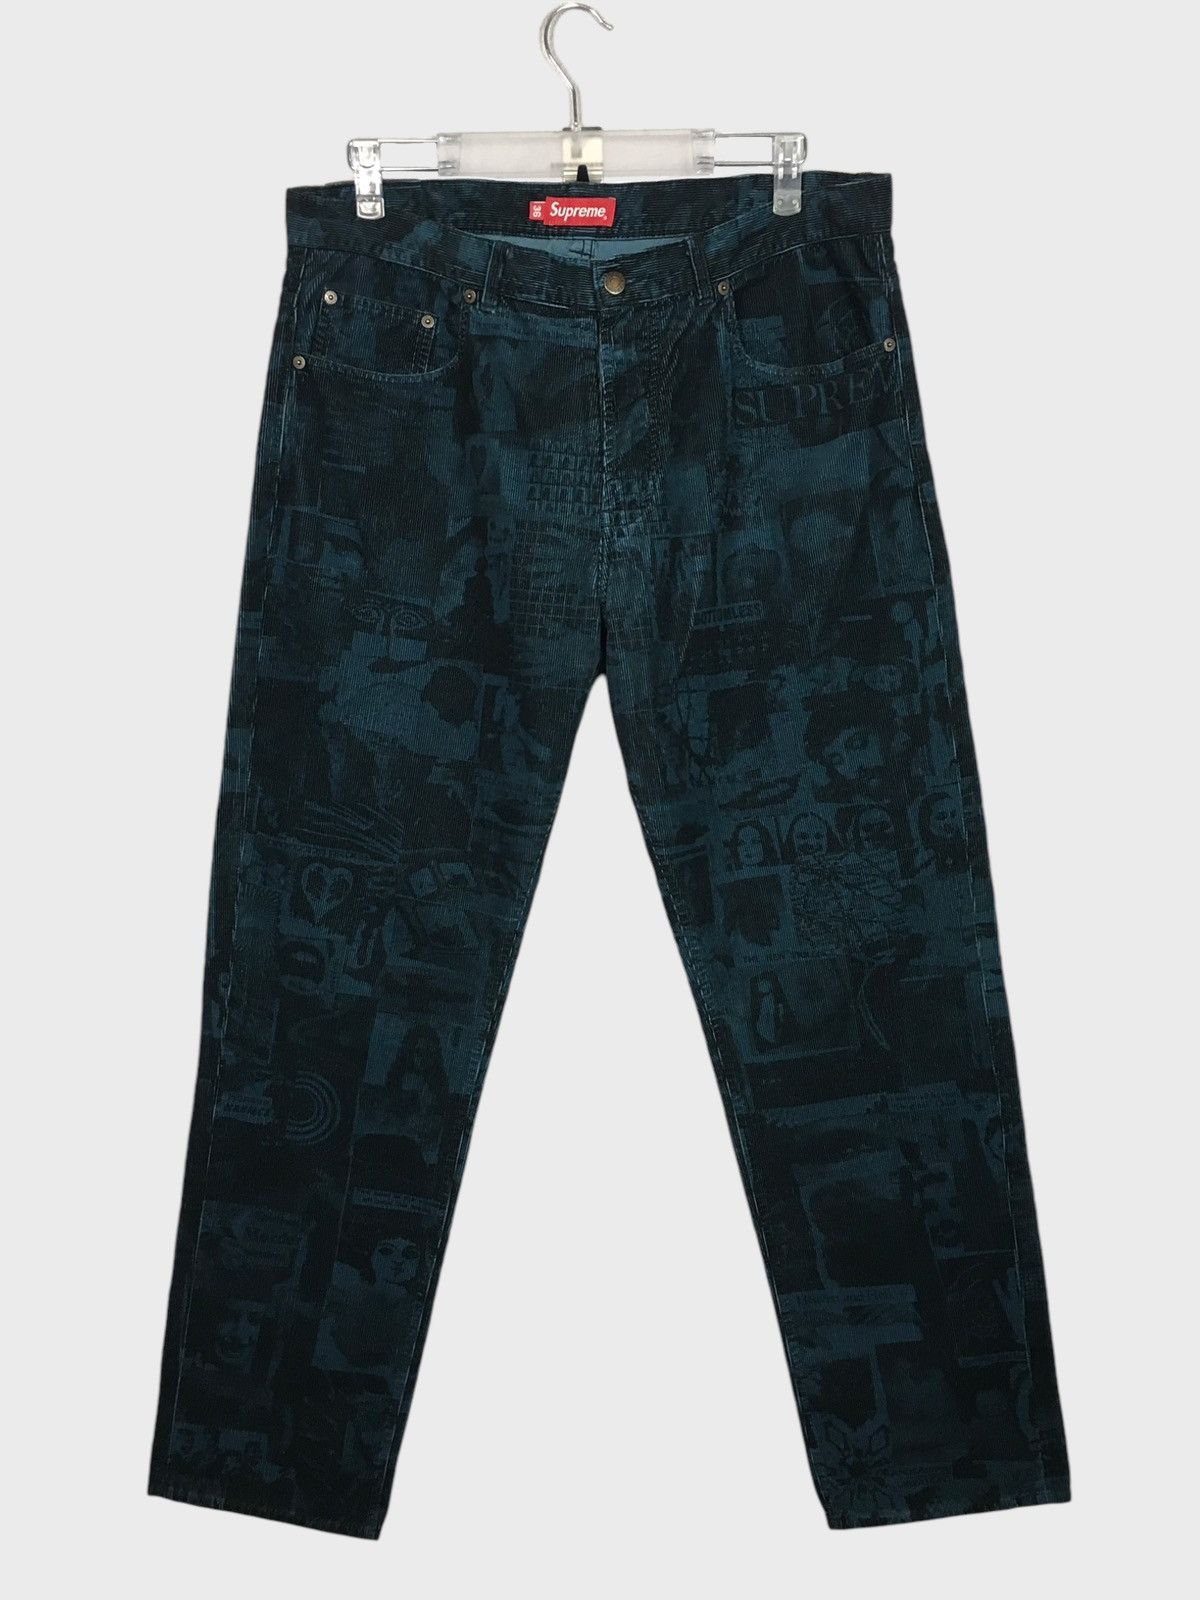 Supreme trousers SUPREME Vibrations Corduroy pants y2k vintage skate |  Grailed